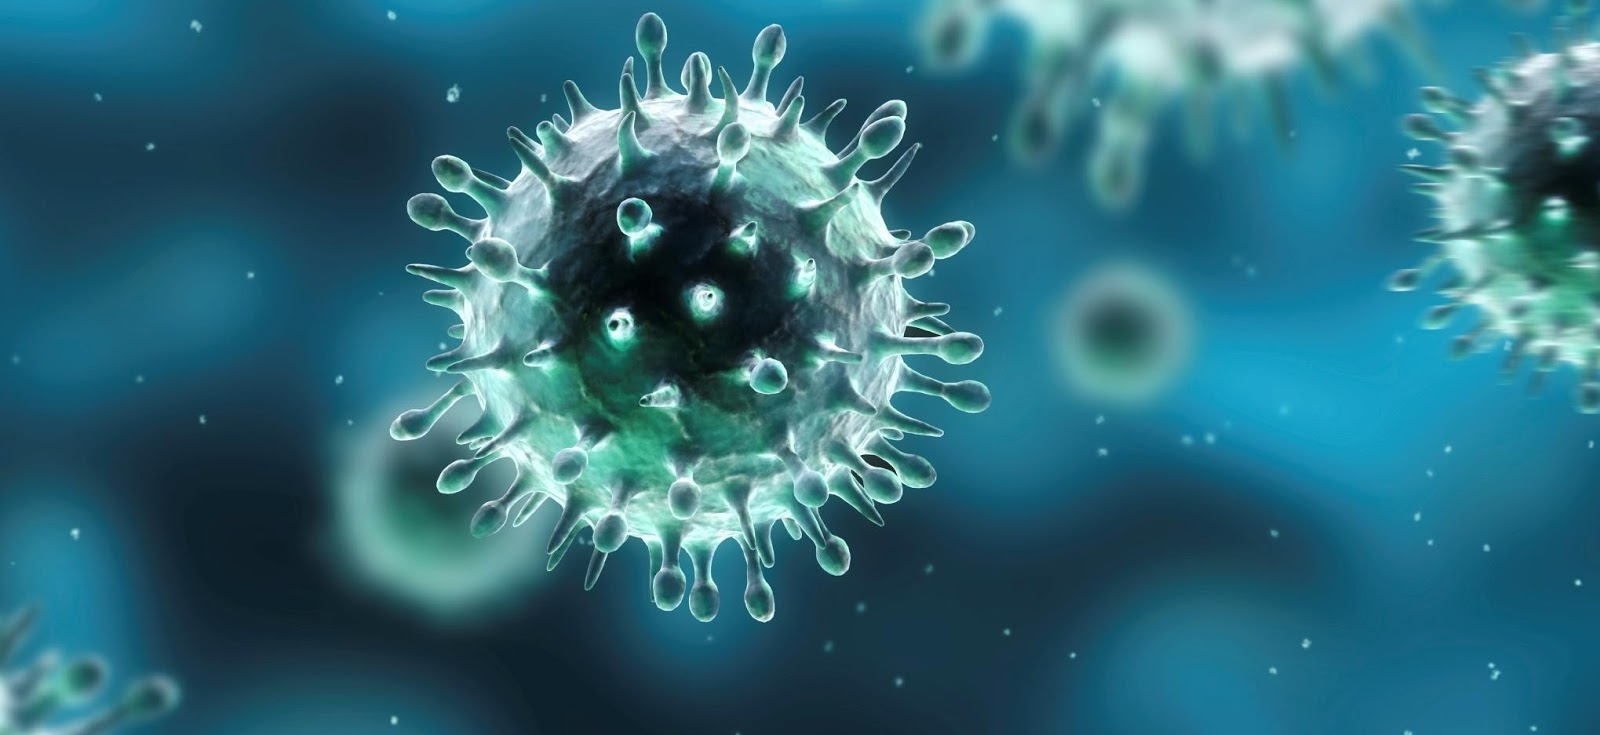 cara menyembuhkan penyakit herpes